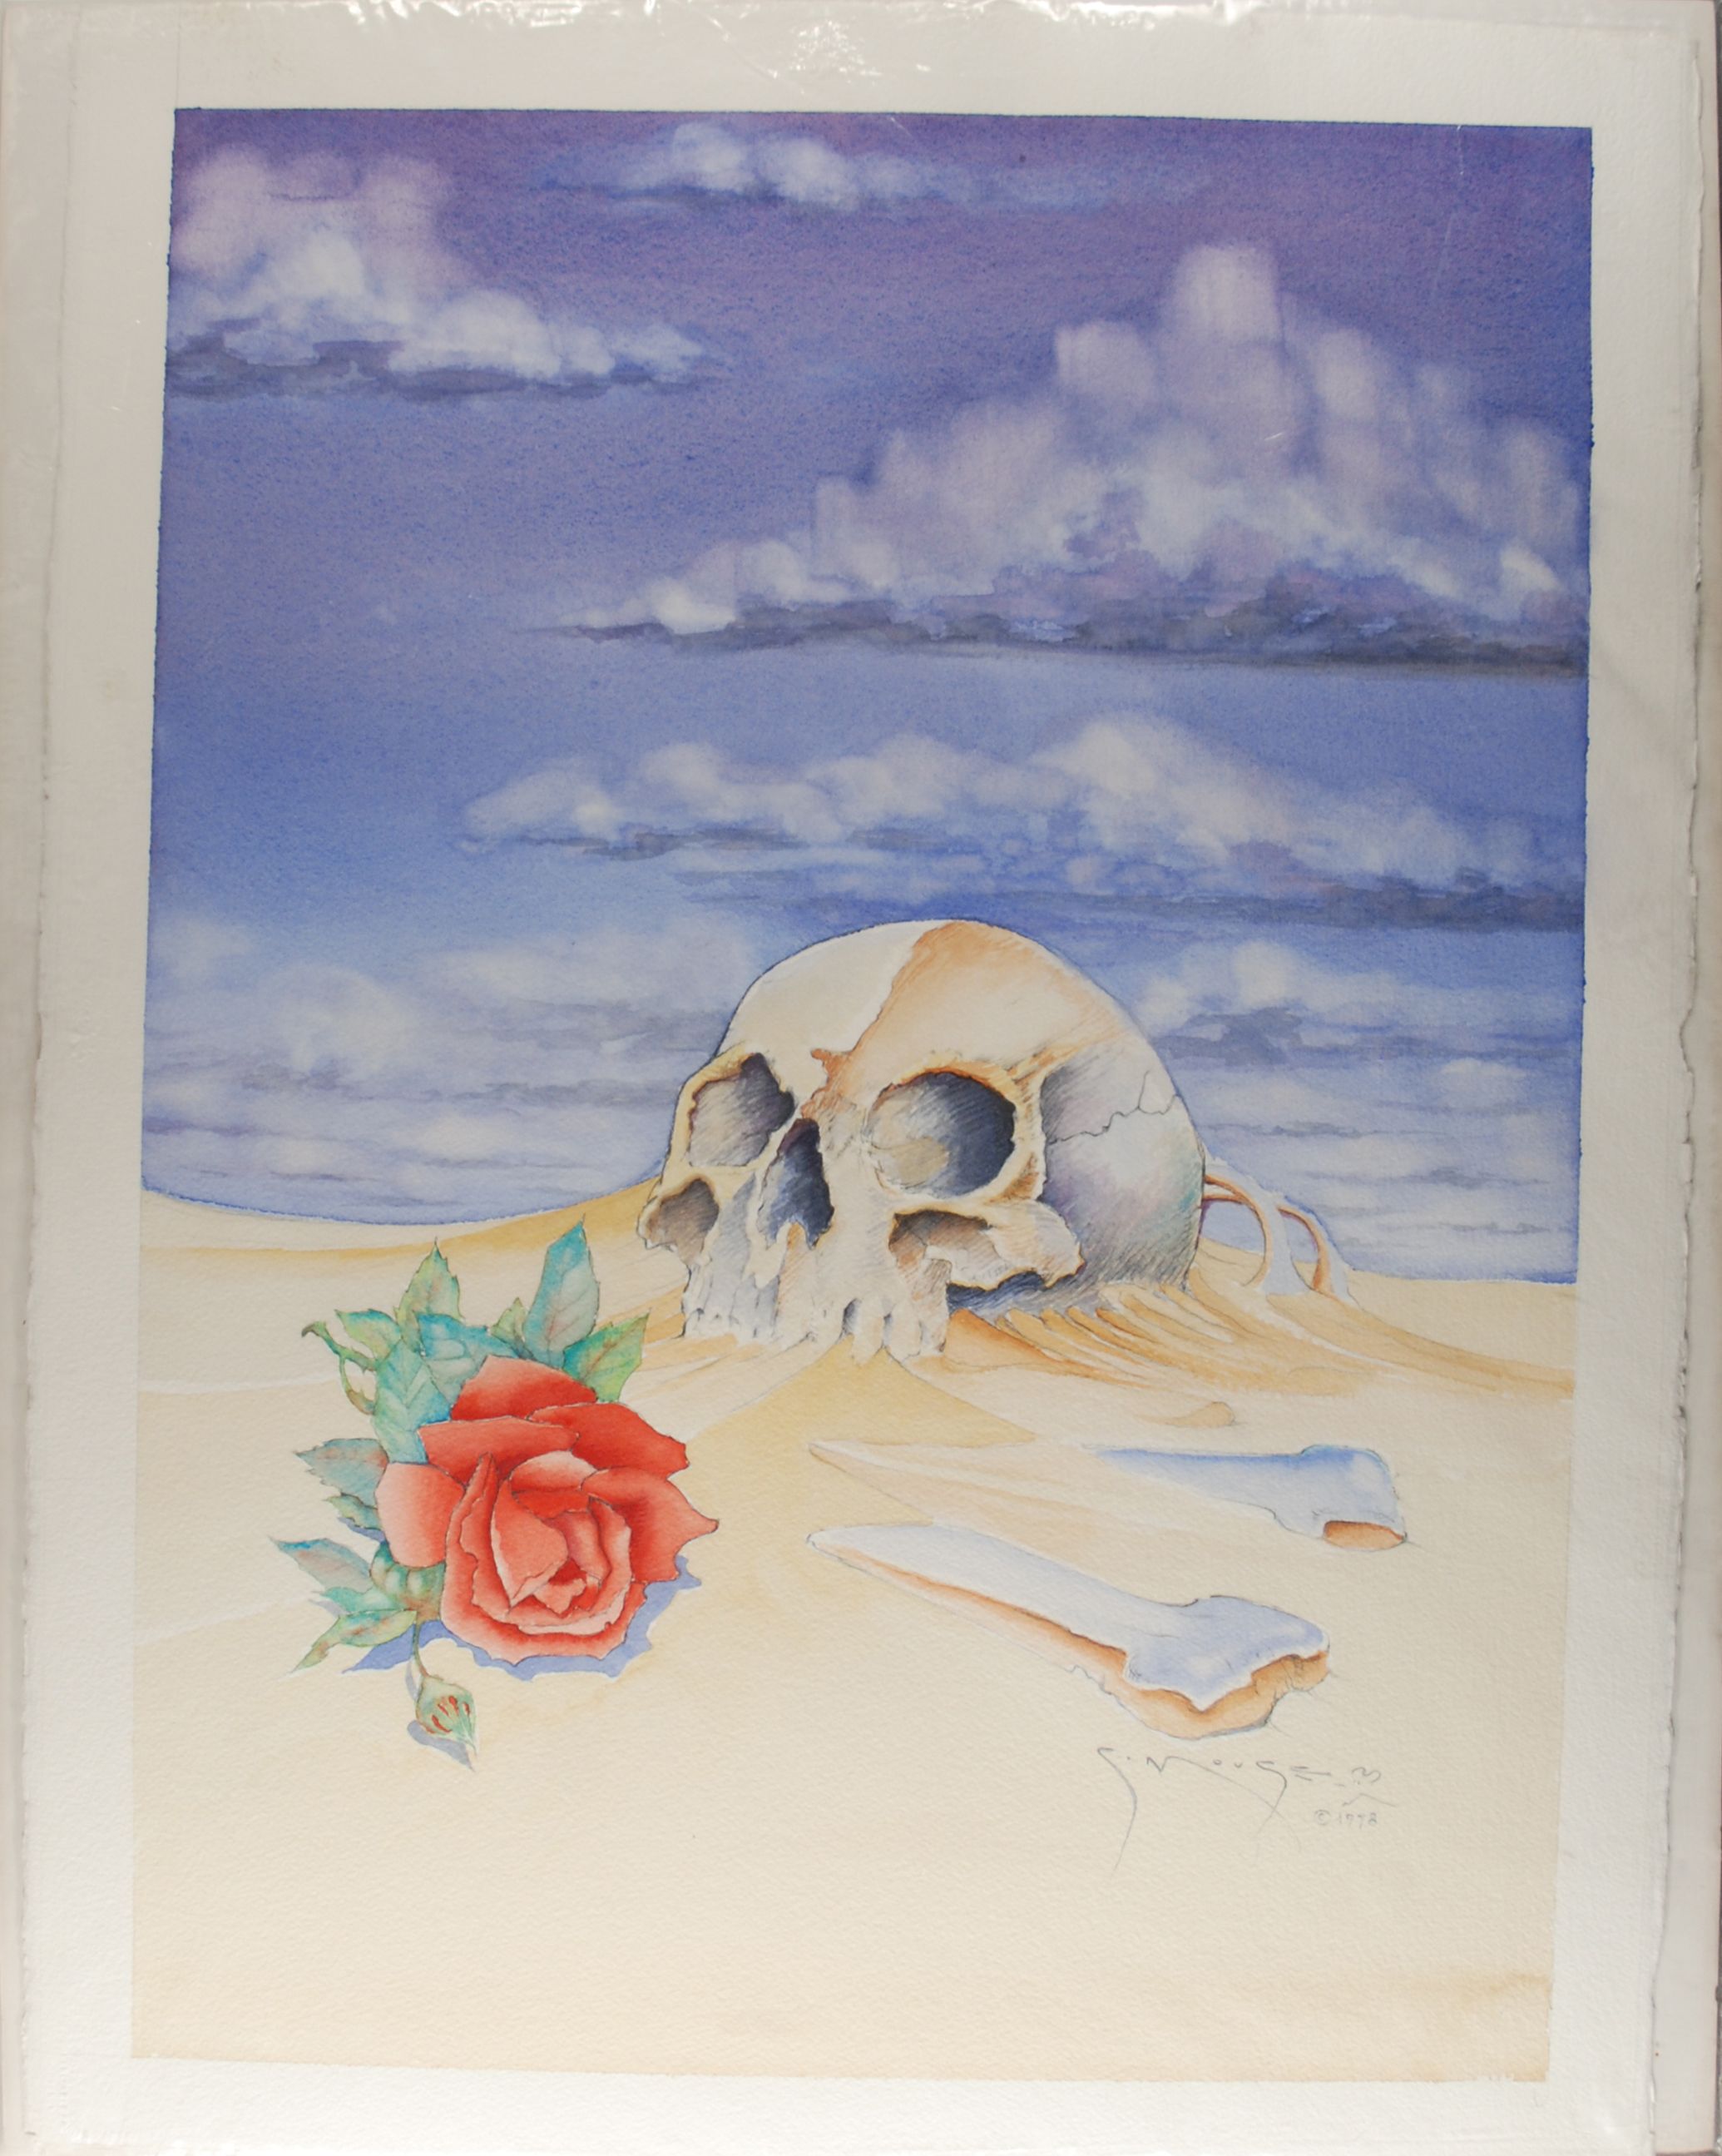 Stanley Mouse / Grateful Dead original art 1978 Concert Poster